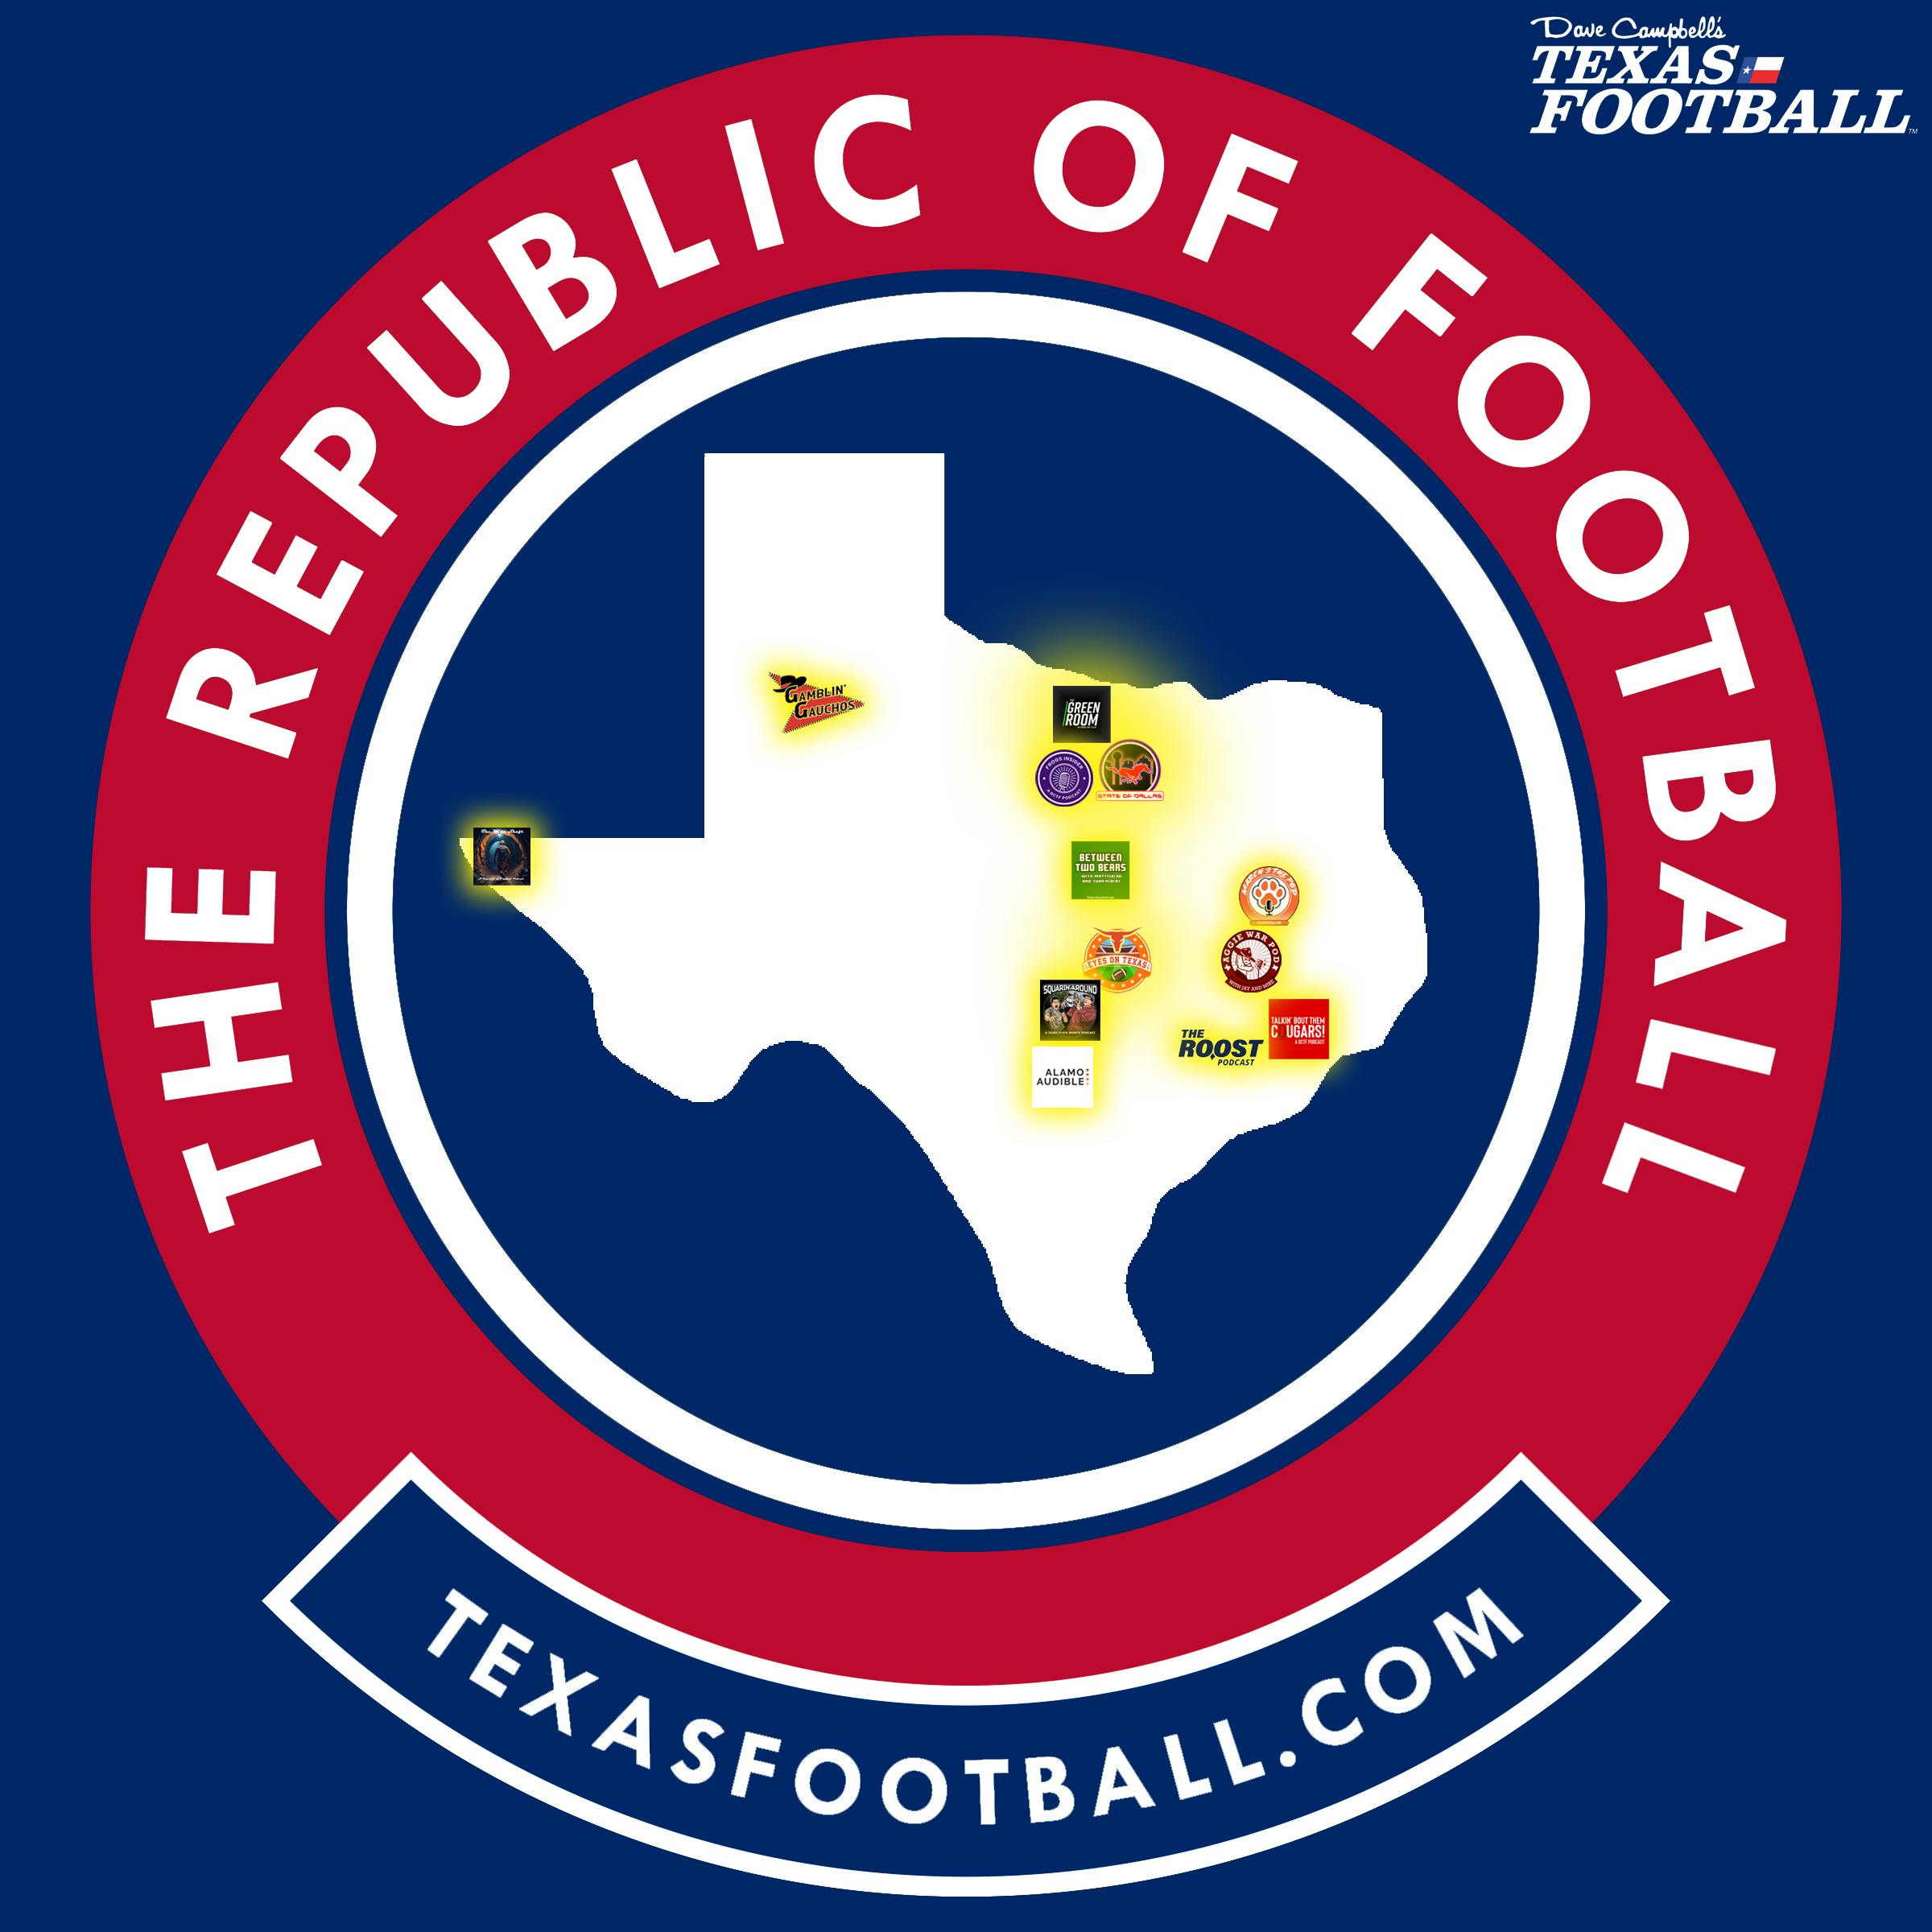 The Republic Of Football